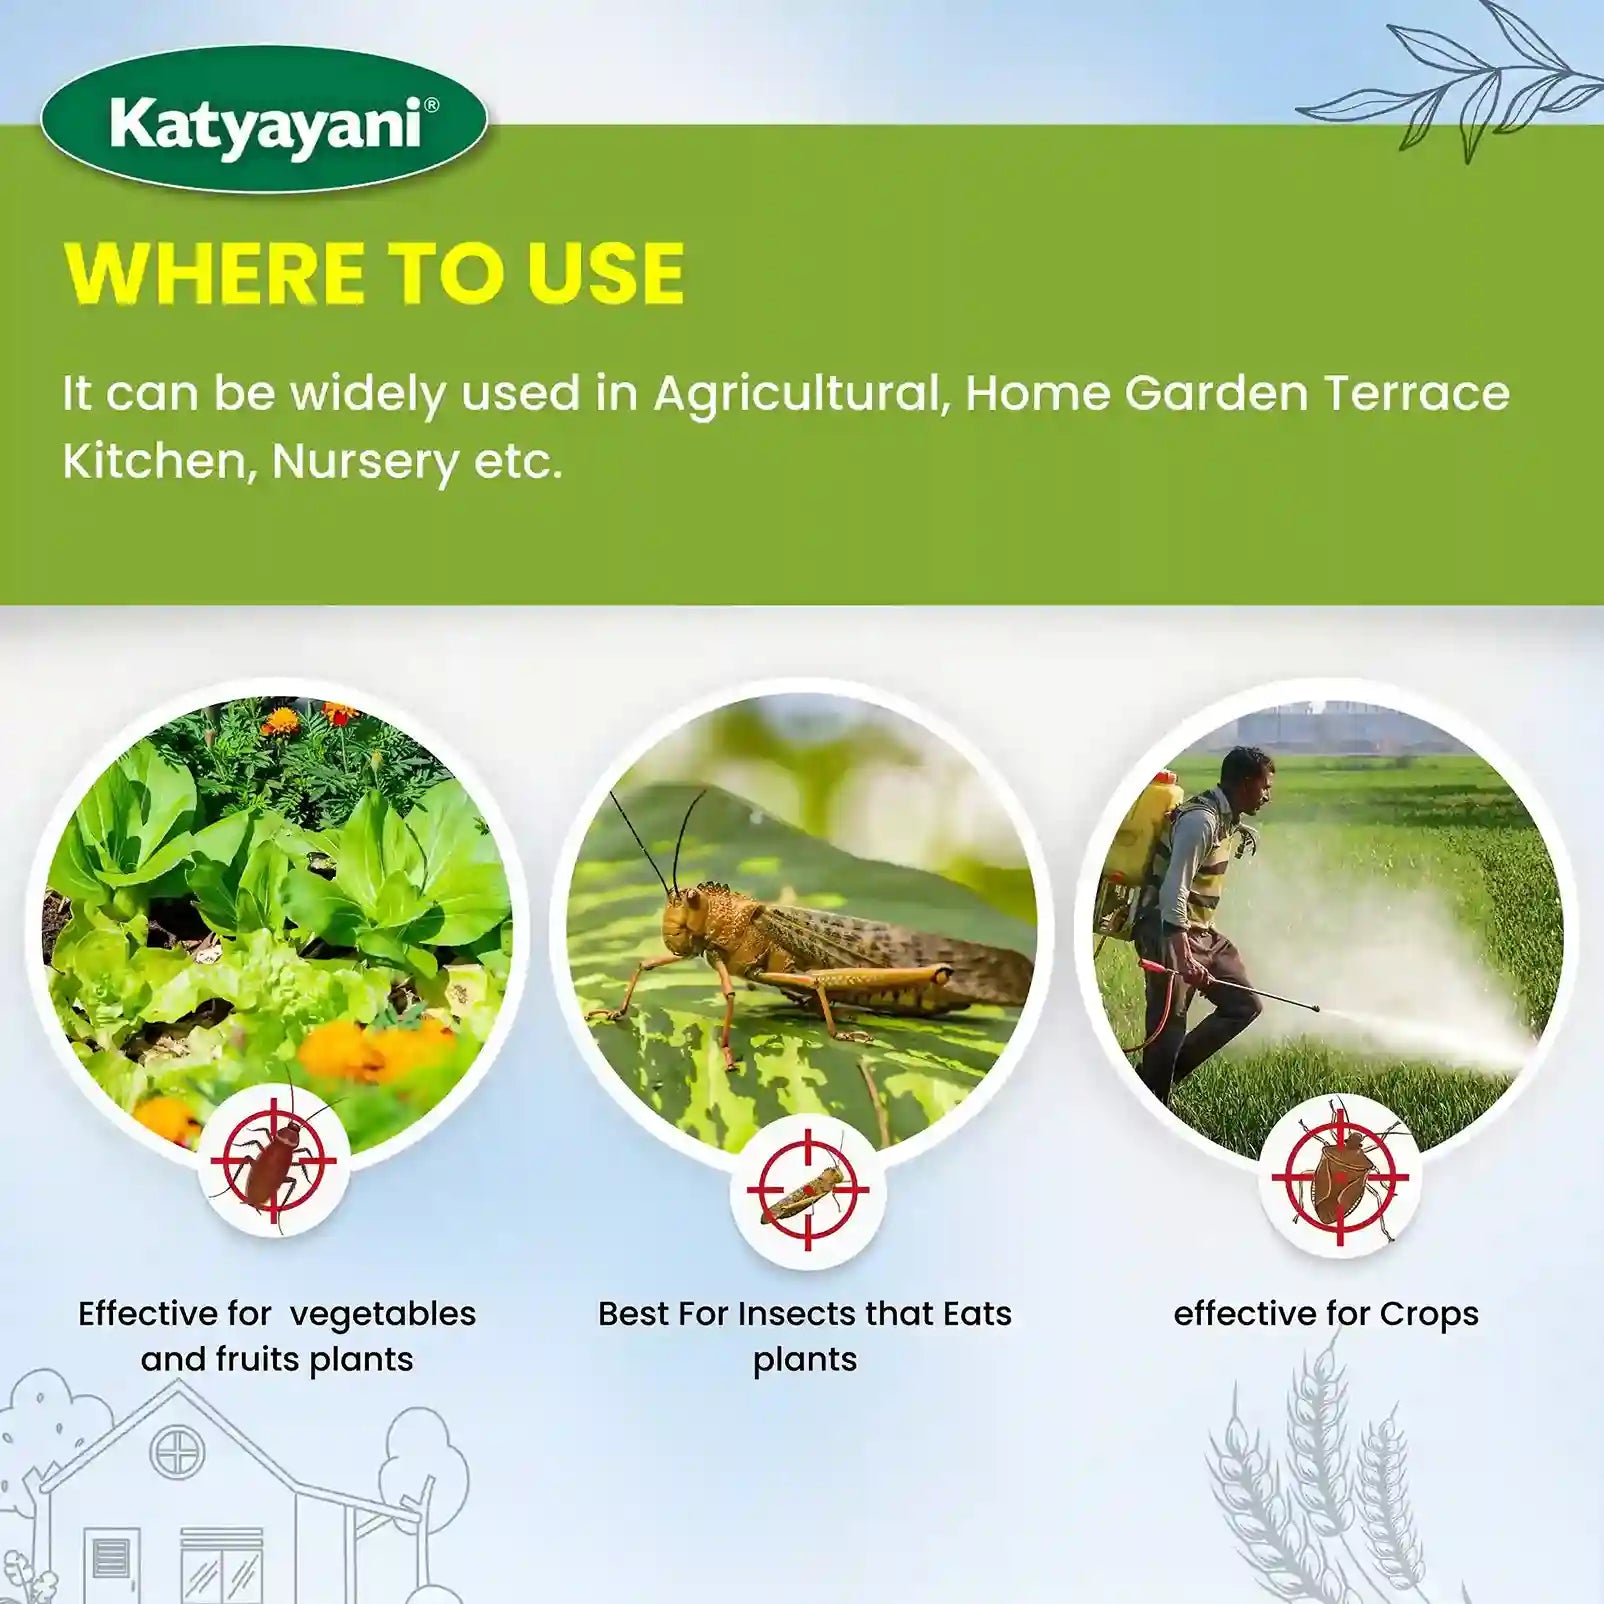 Katyayani ASHWAMEDH ( Diafenthiuron 50 % WP) Insecticide uses in crops